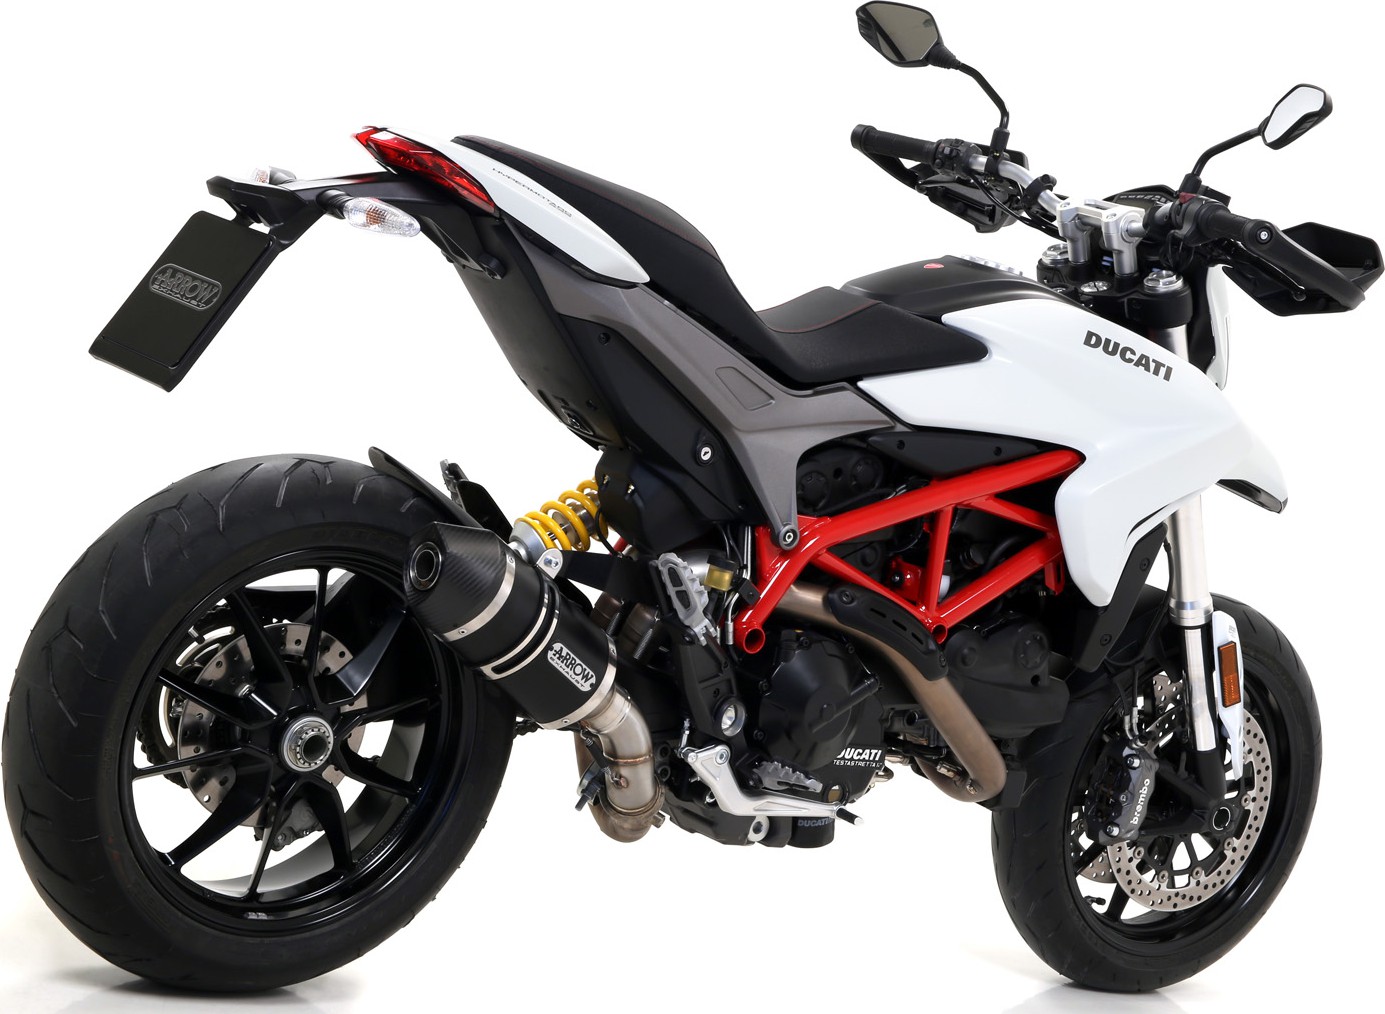  Ducati Hypermotard / Hyperstrada, Bj. 2013-2015 